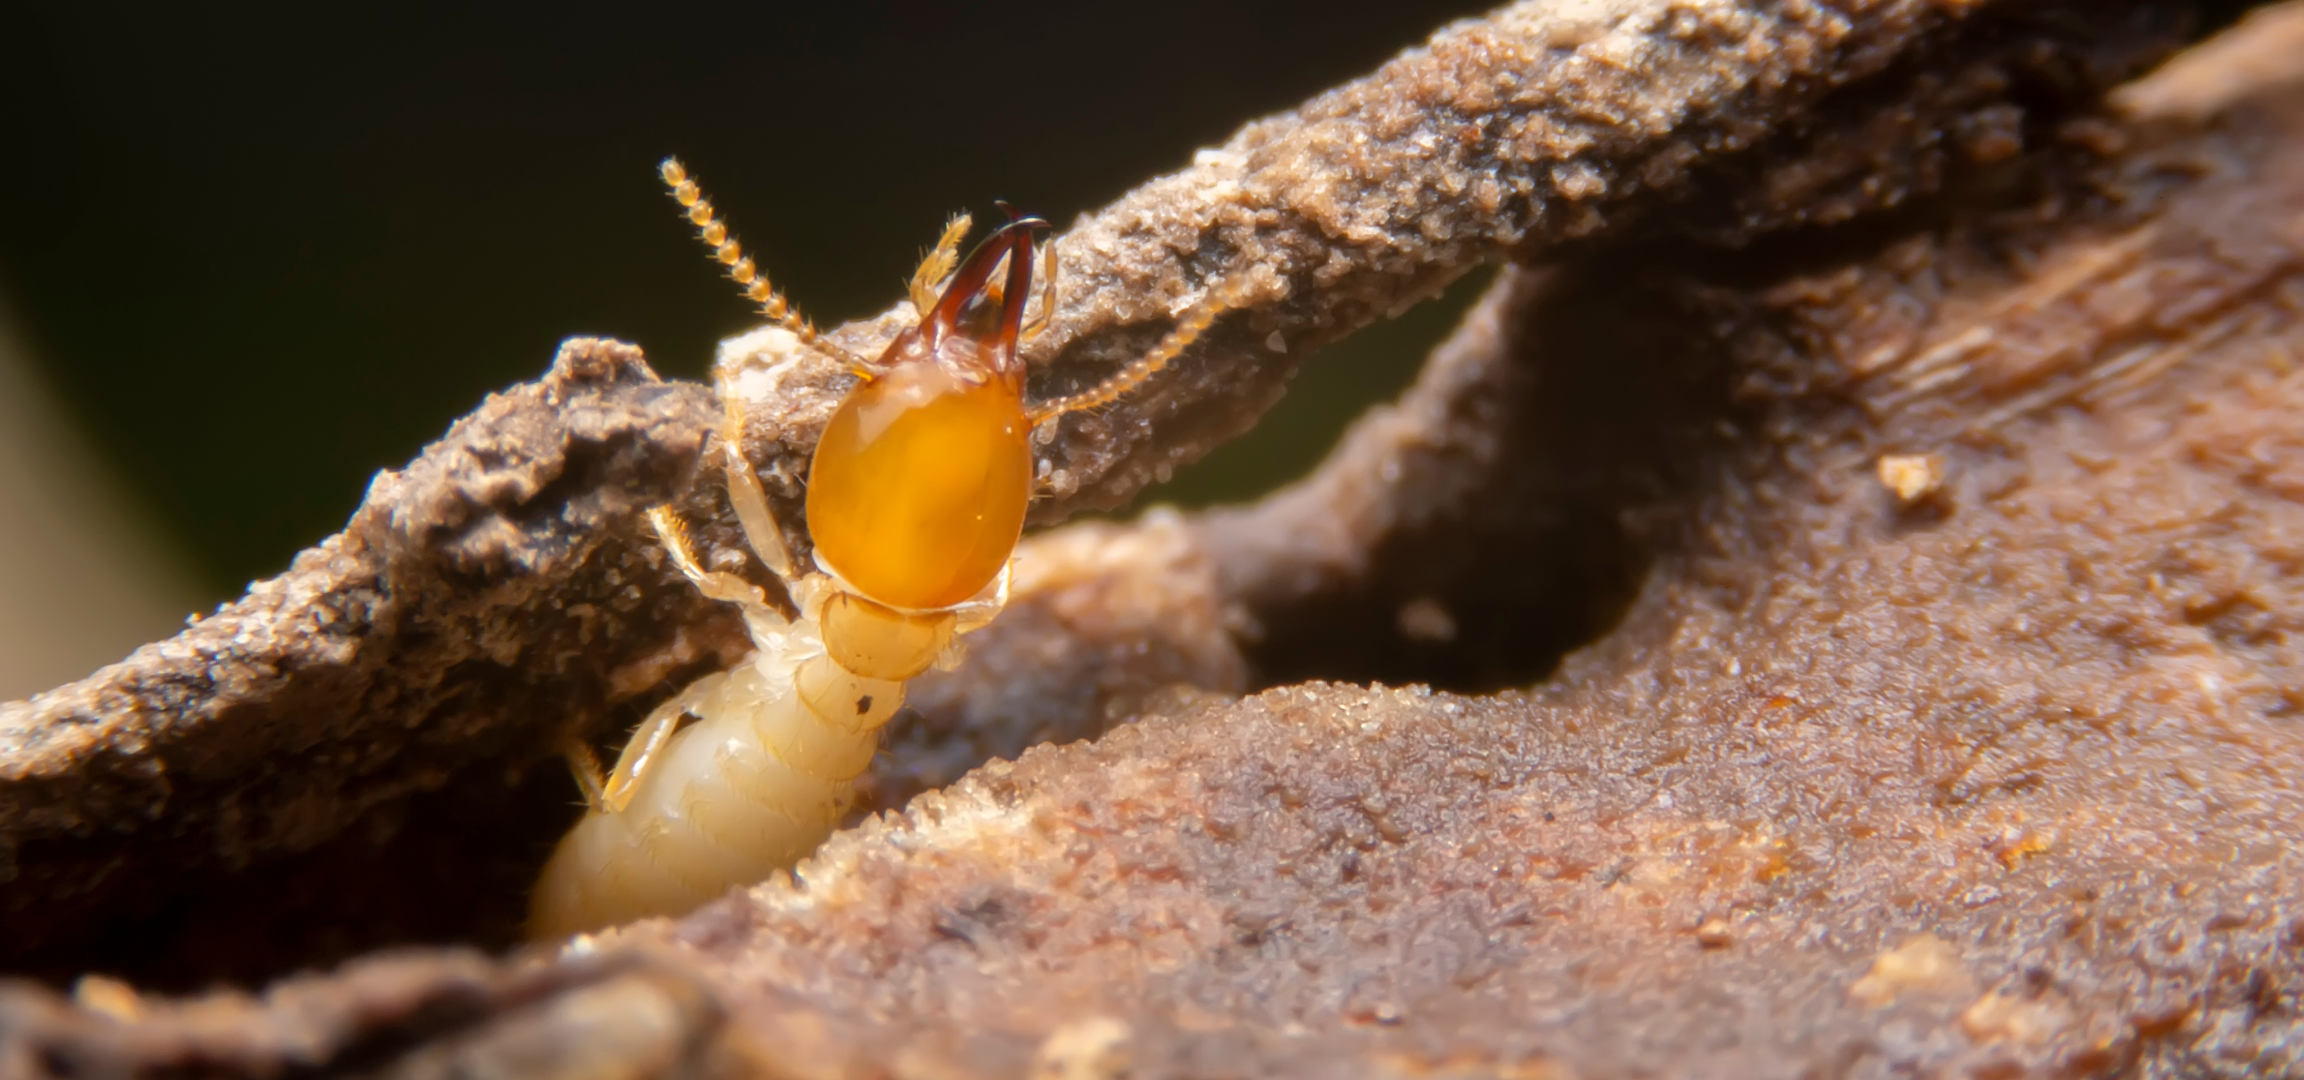 Premier Termite Control Services in Atlanta with North Fulton Pest Solutions